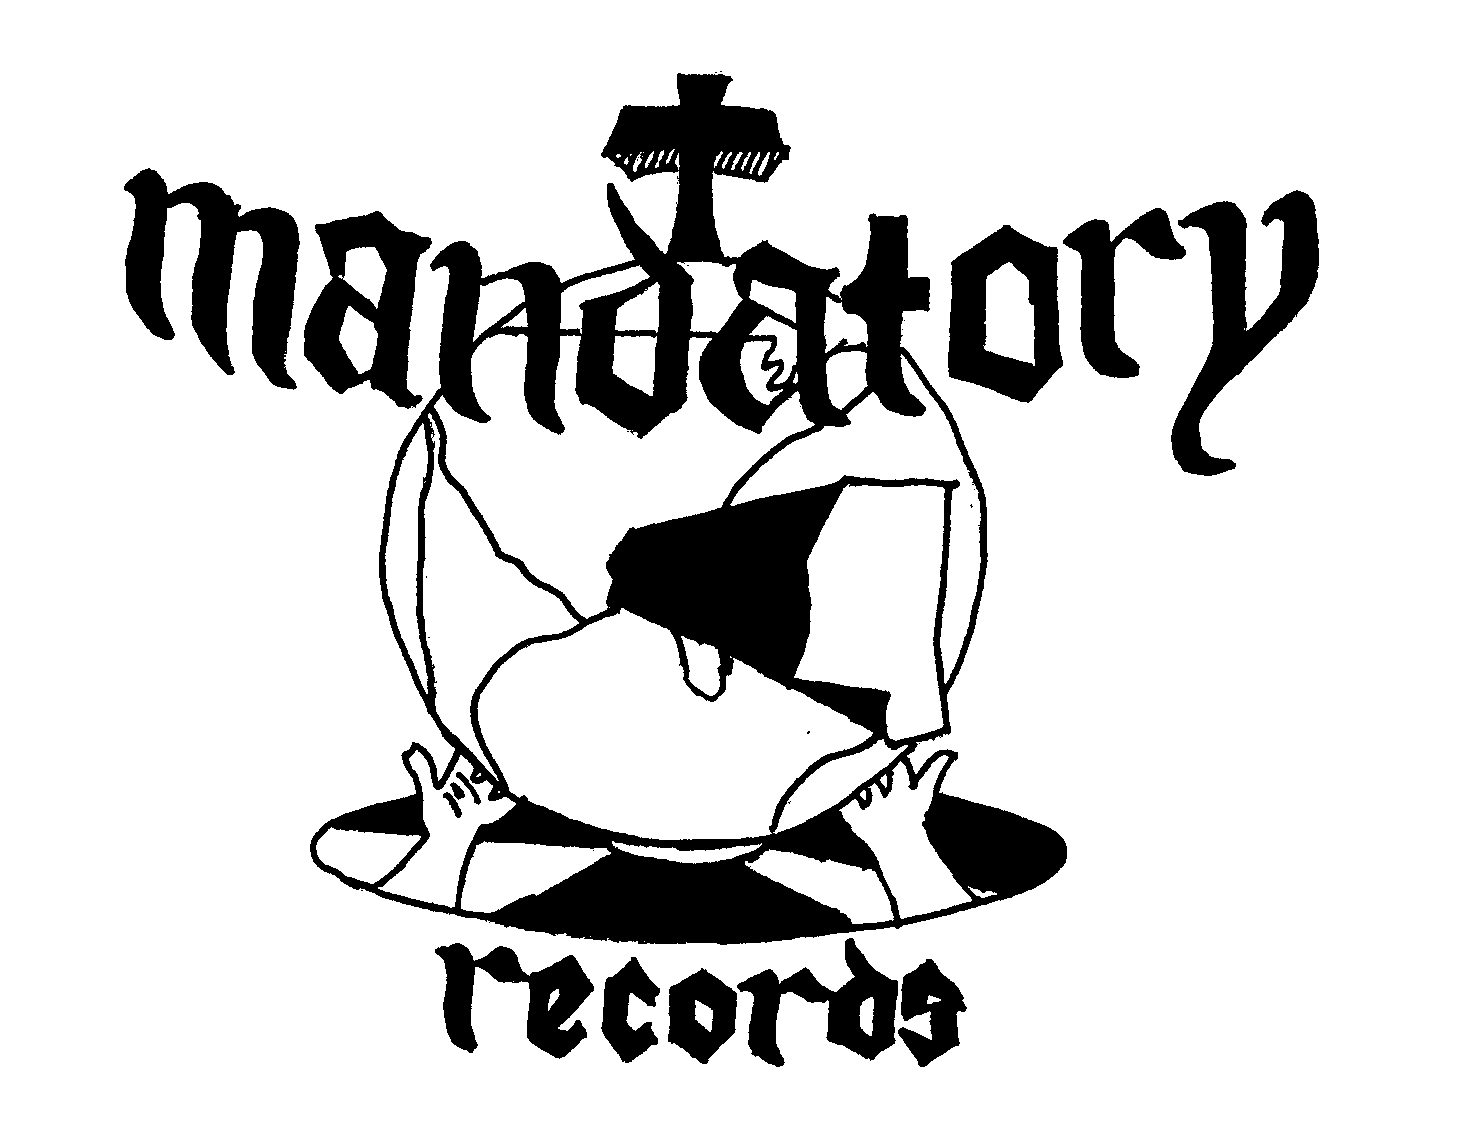  MANDATORY RECORDS